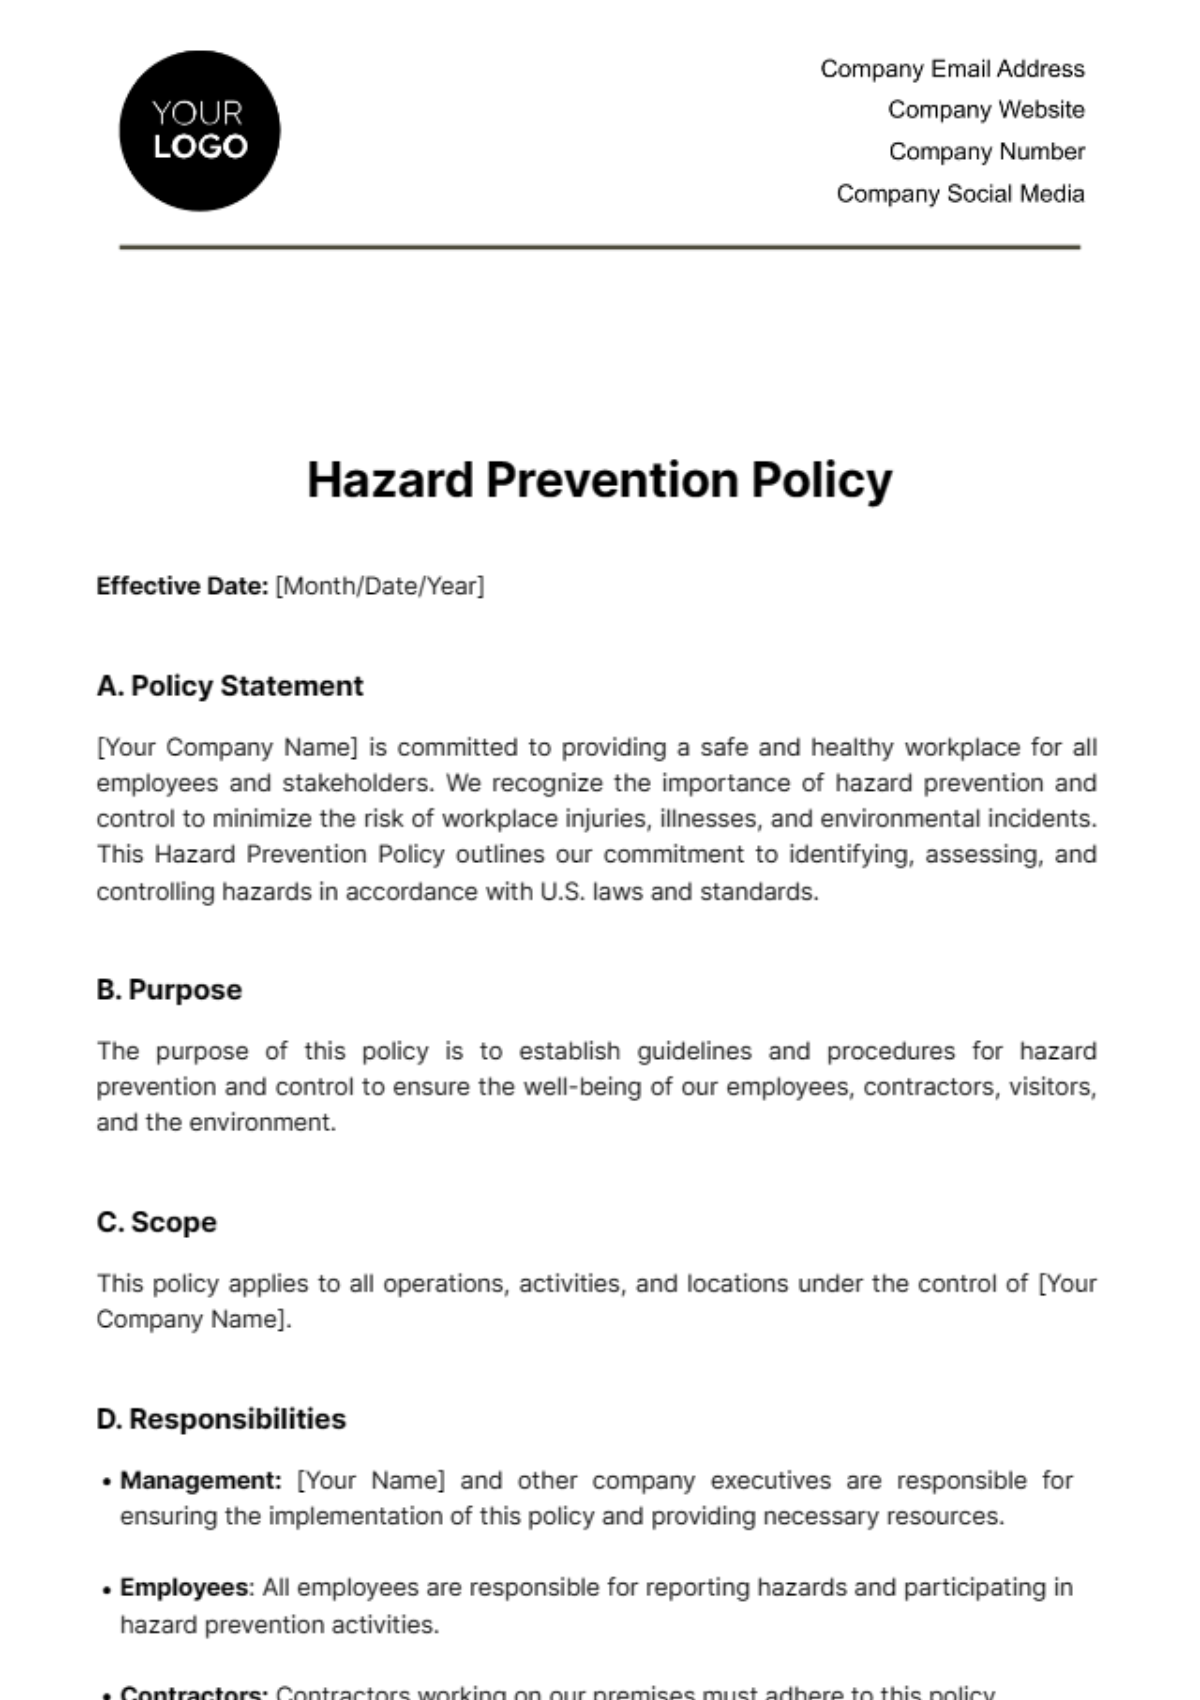 Hazard Prevention Policy Template